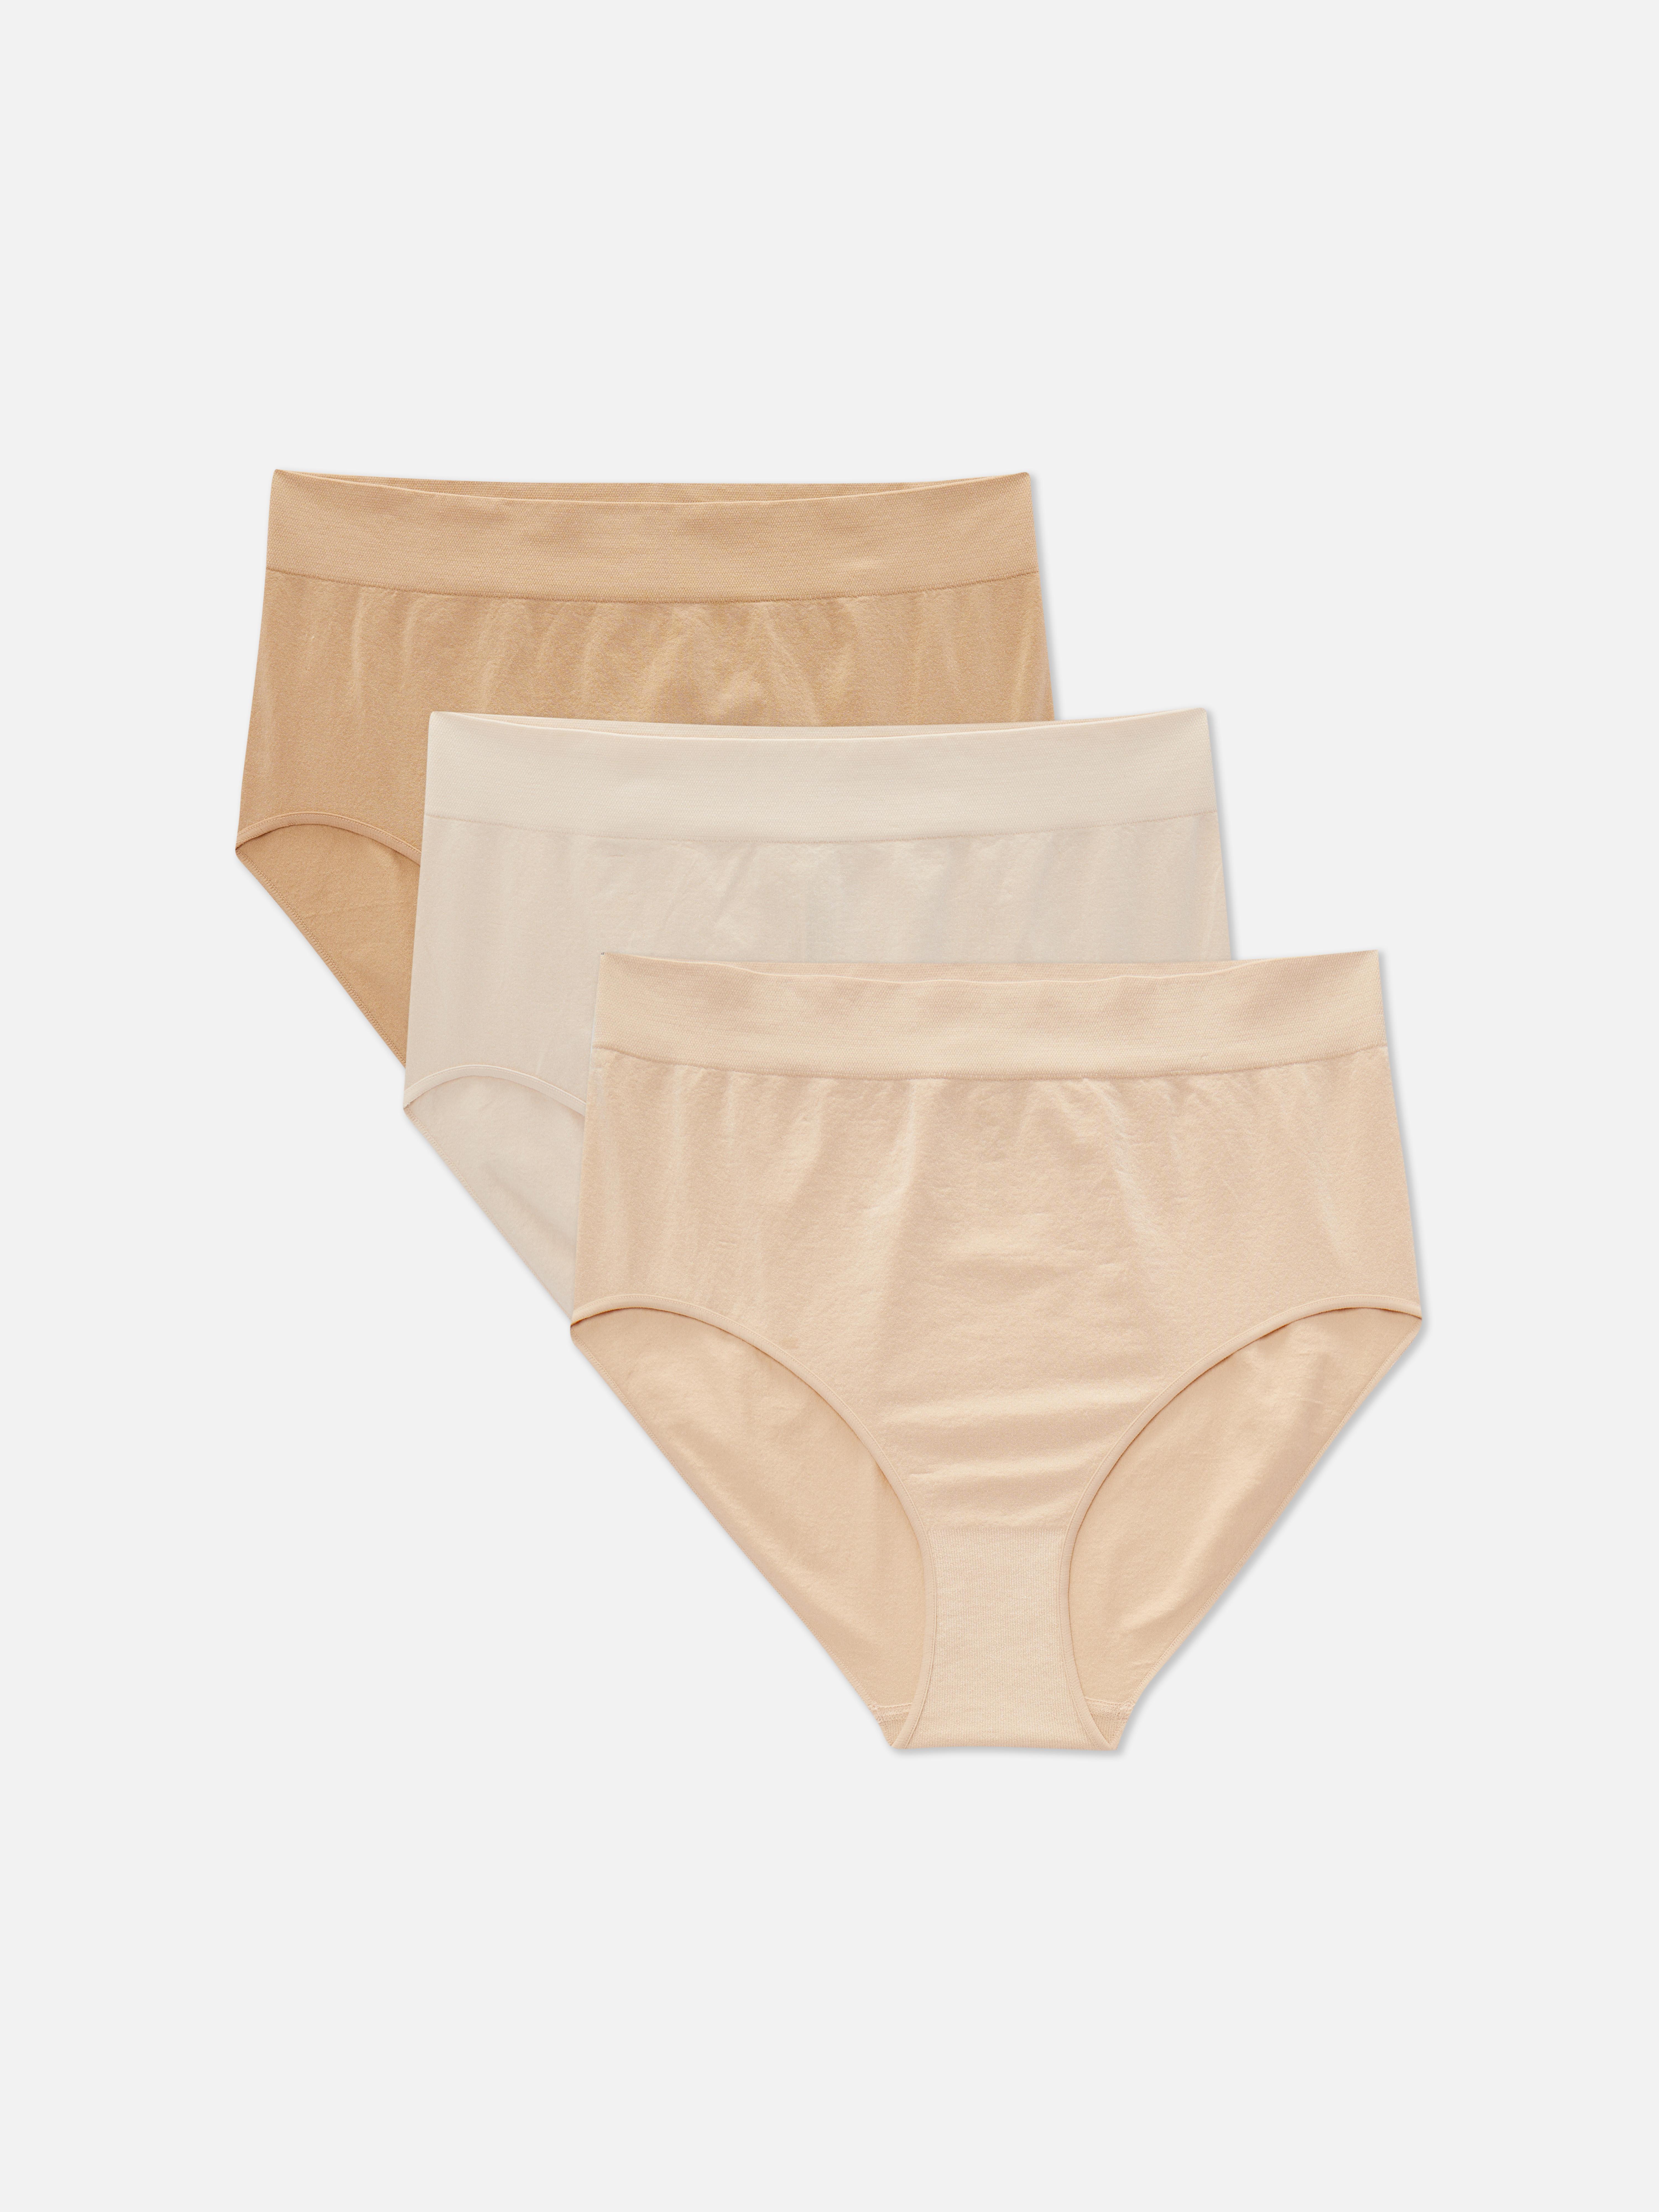 PRIMARK WOMEN'S LADIES Girls 5 Pack Brazillian Knickers Briefs Underwear  £6.99 - PicClick UK